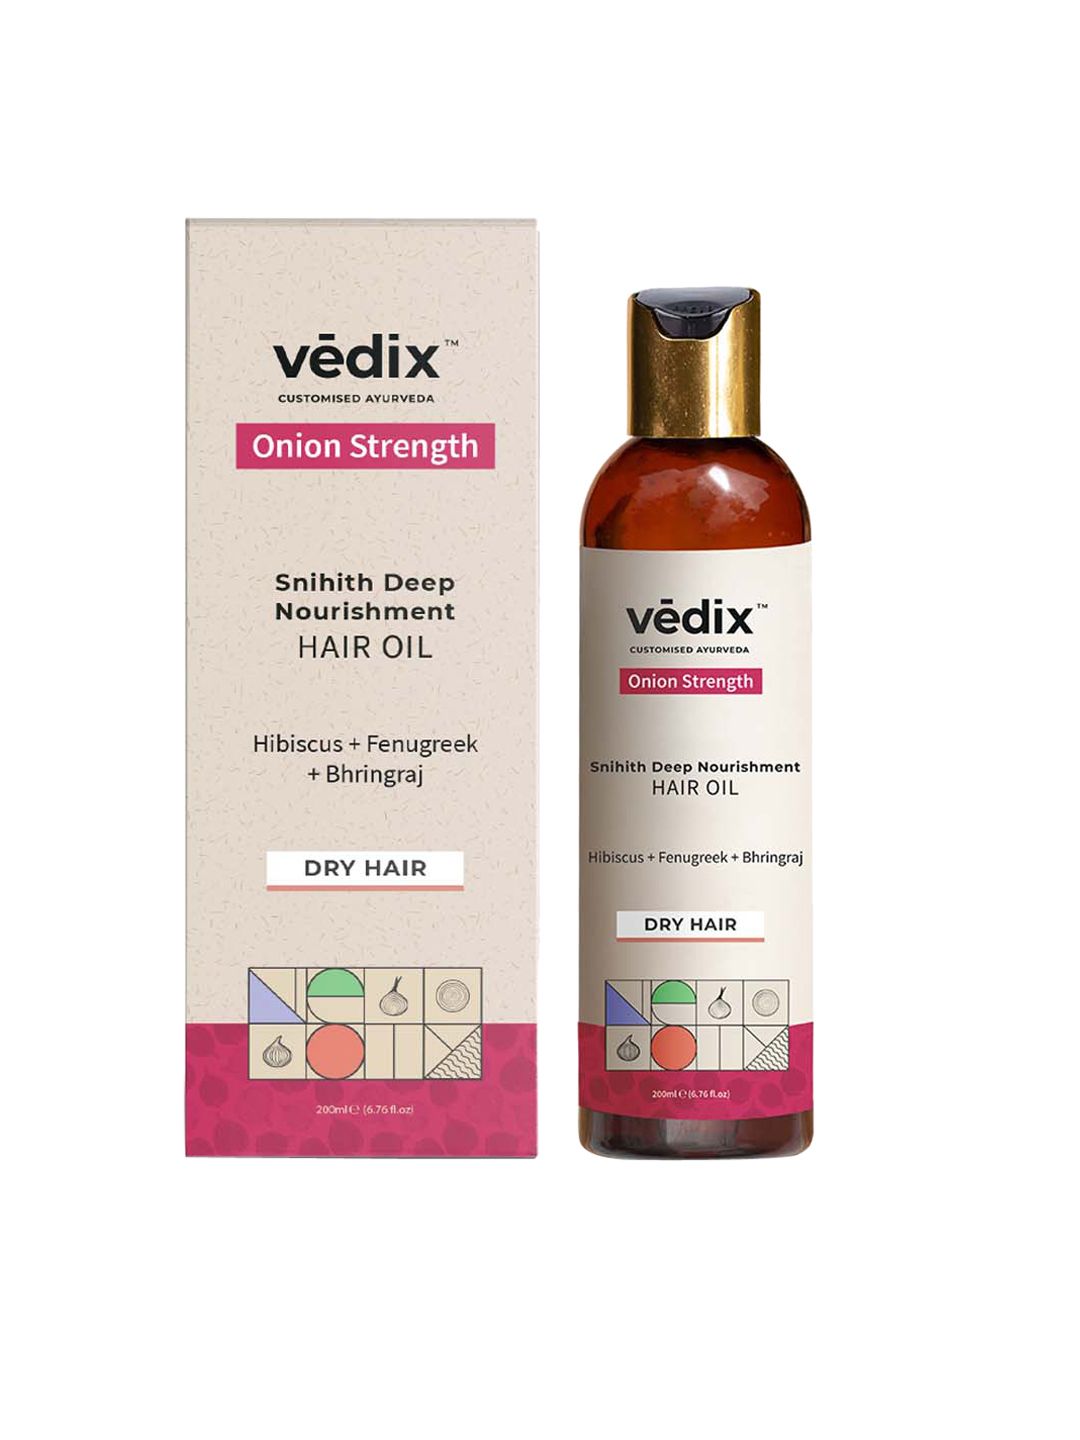 VEDIX Customized Ayurvedic Snihith Deep Nourishment Onion Hair Oil - 200 ml Price in India